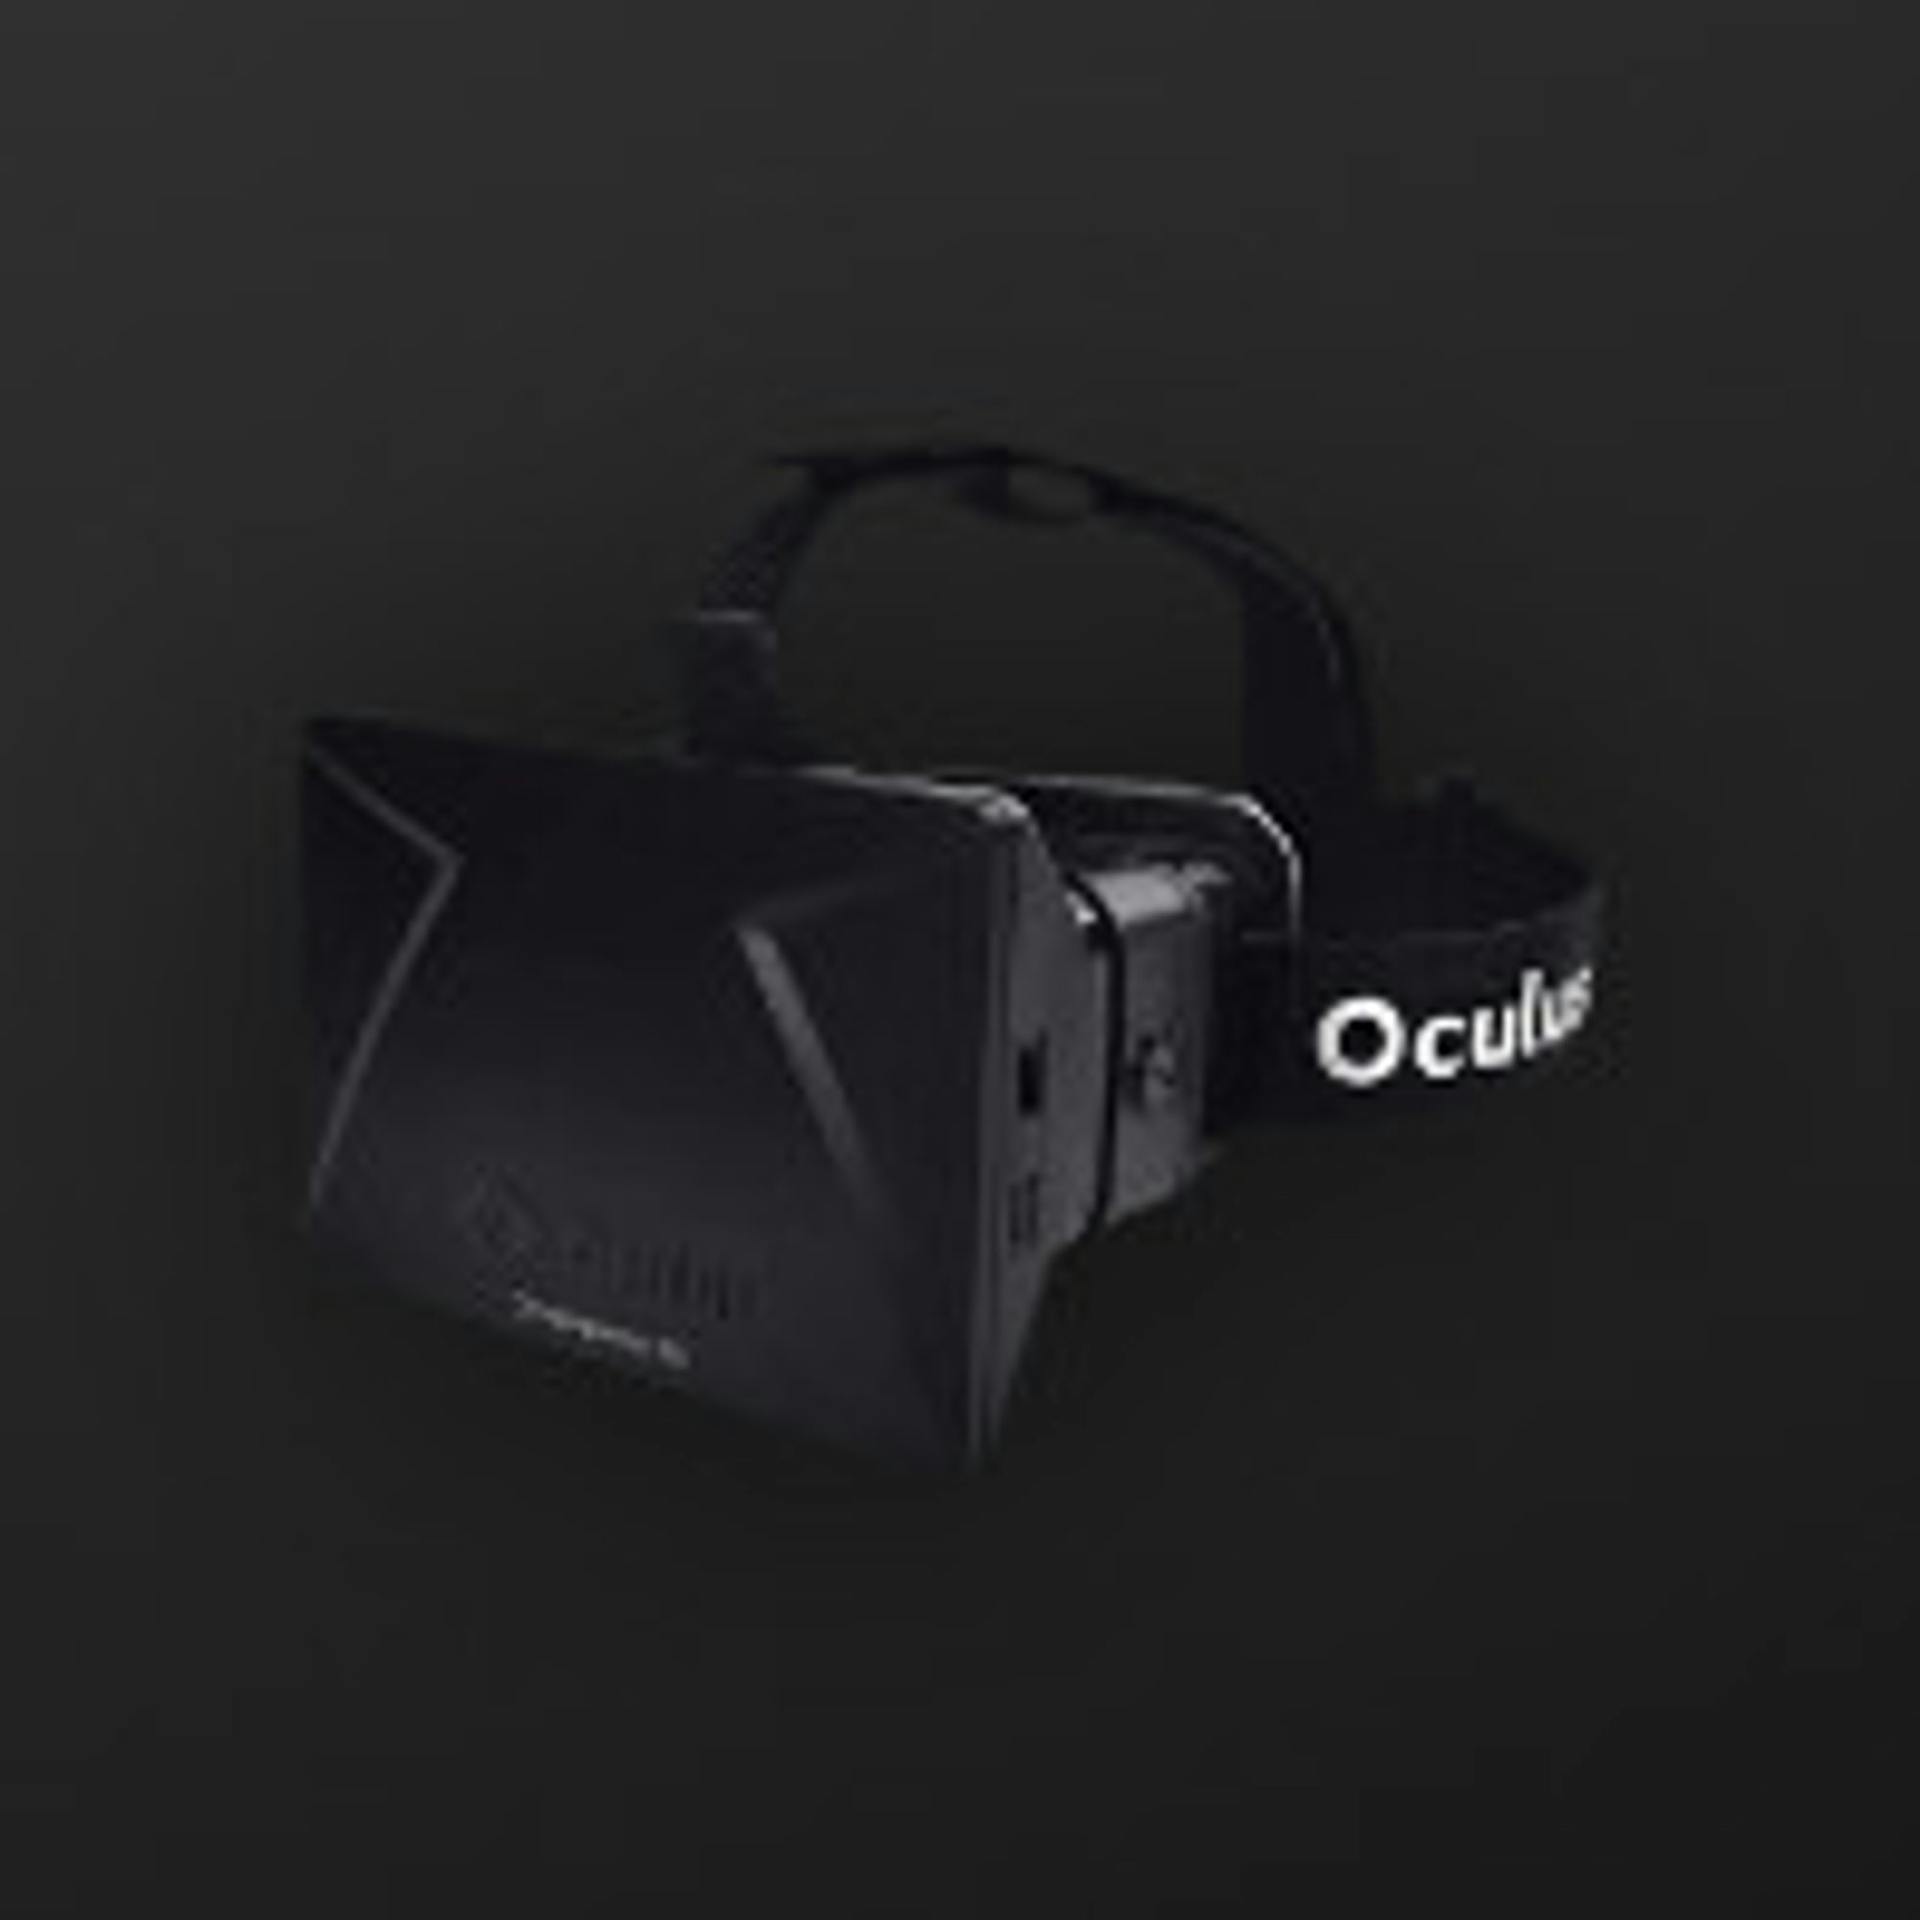 The Dark Sides of VR